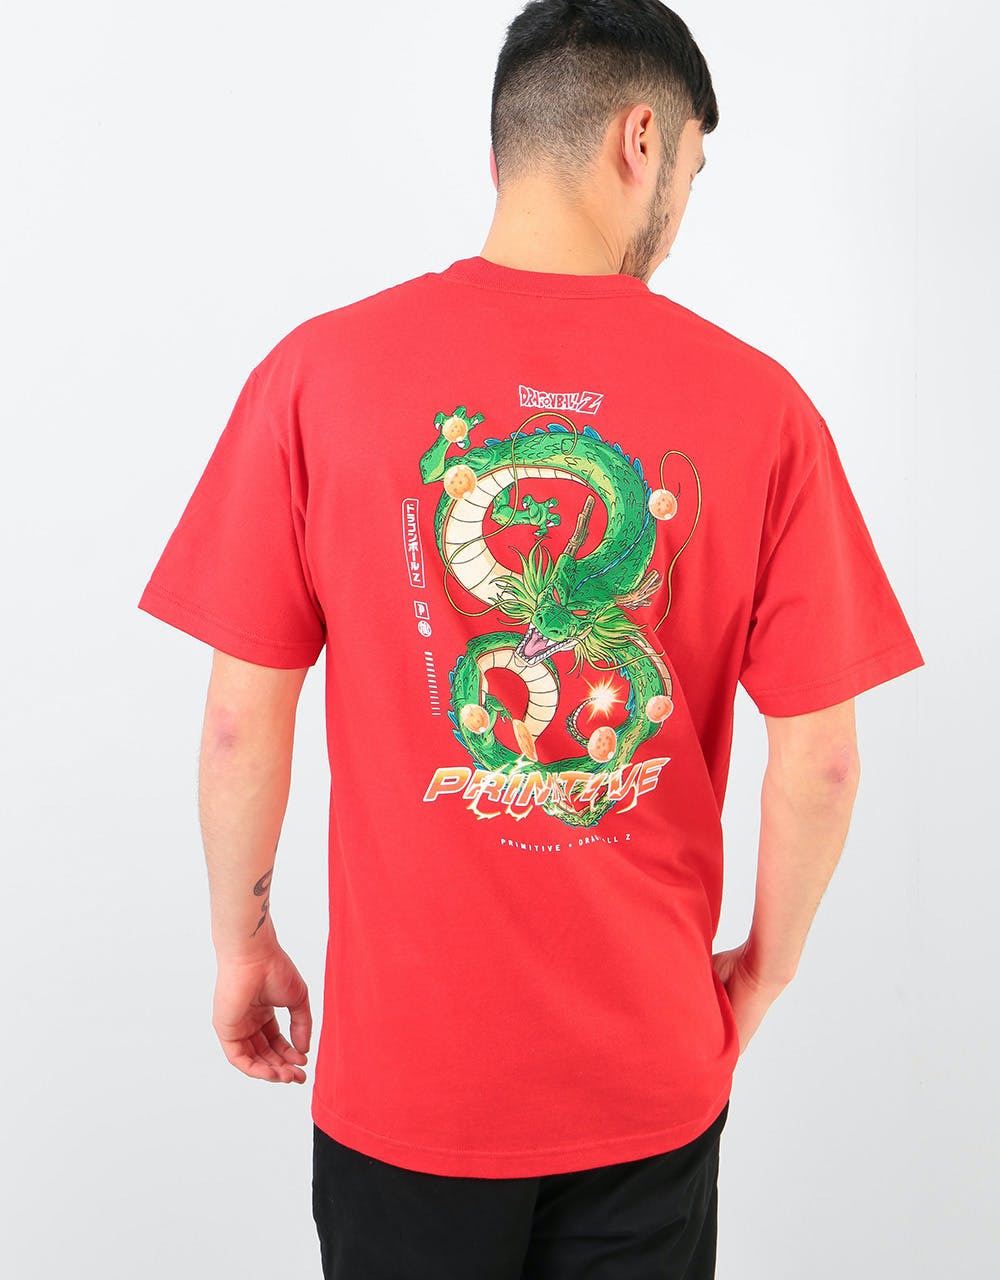 Primitive x Dragon Ball Z Shenron Dirty P T-Shirt - Red